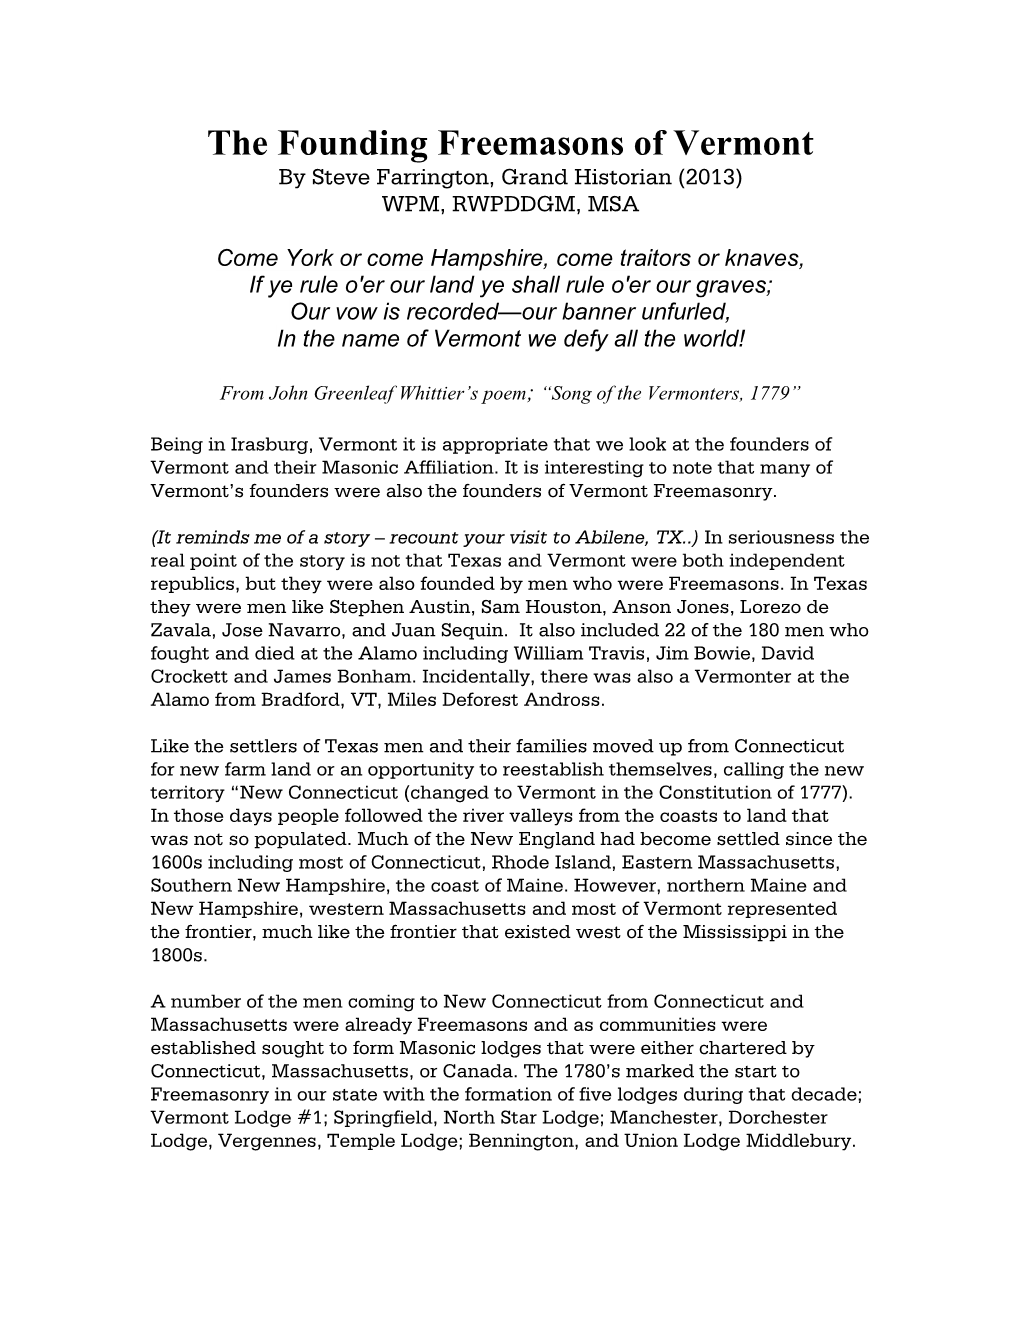 The Founding Freemasons of Vermont by Steve Farrington, Grand Historian (2013) WPM, RWPDDGM, MSA